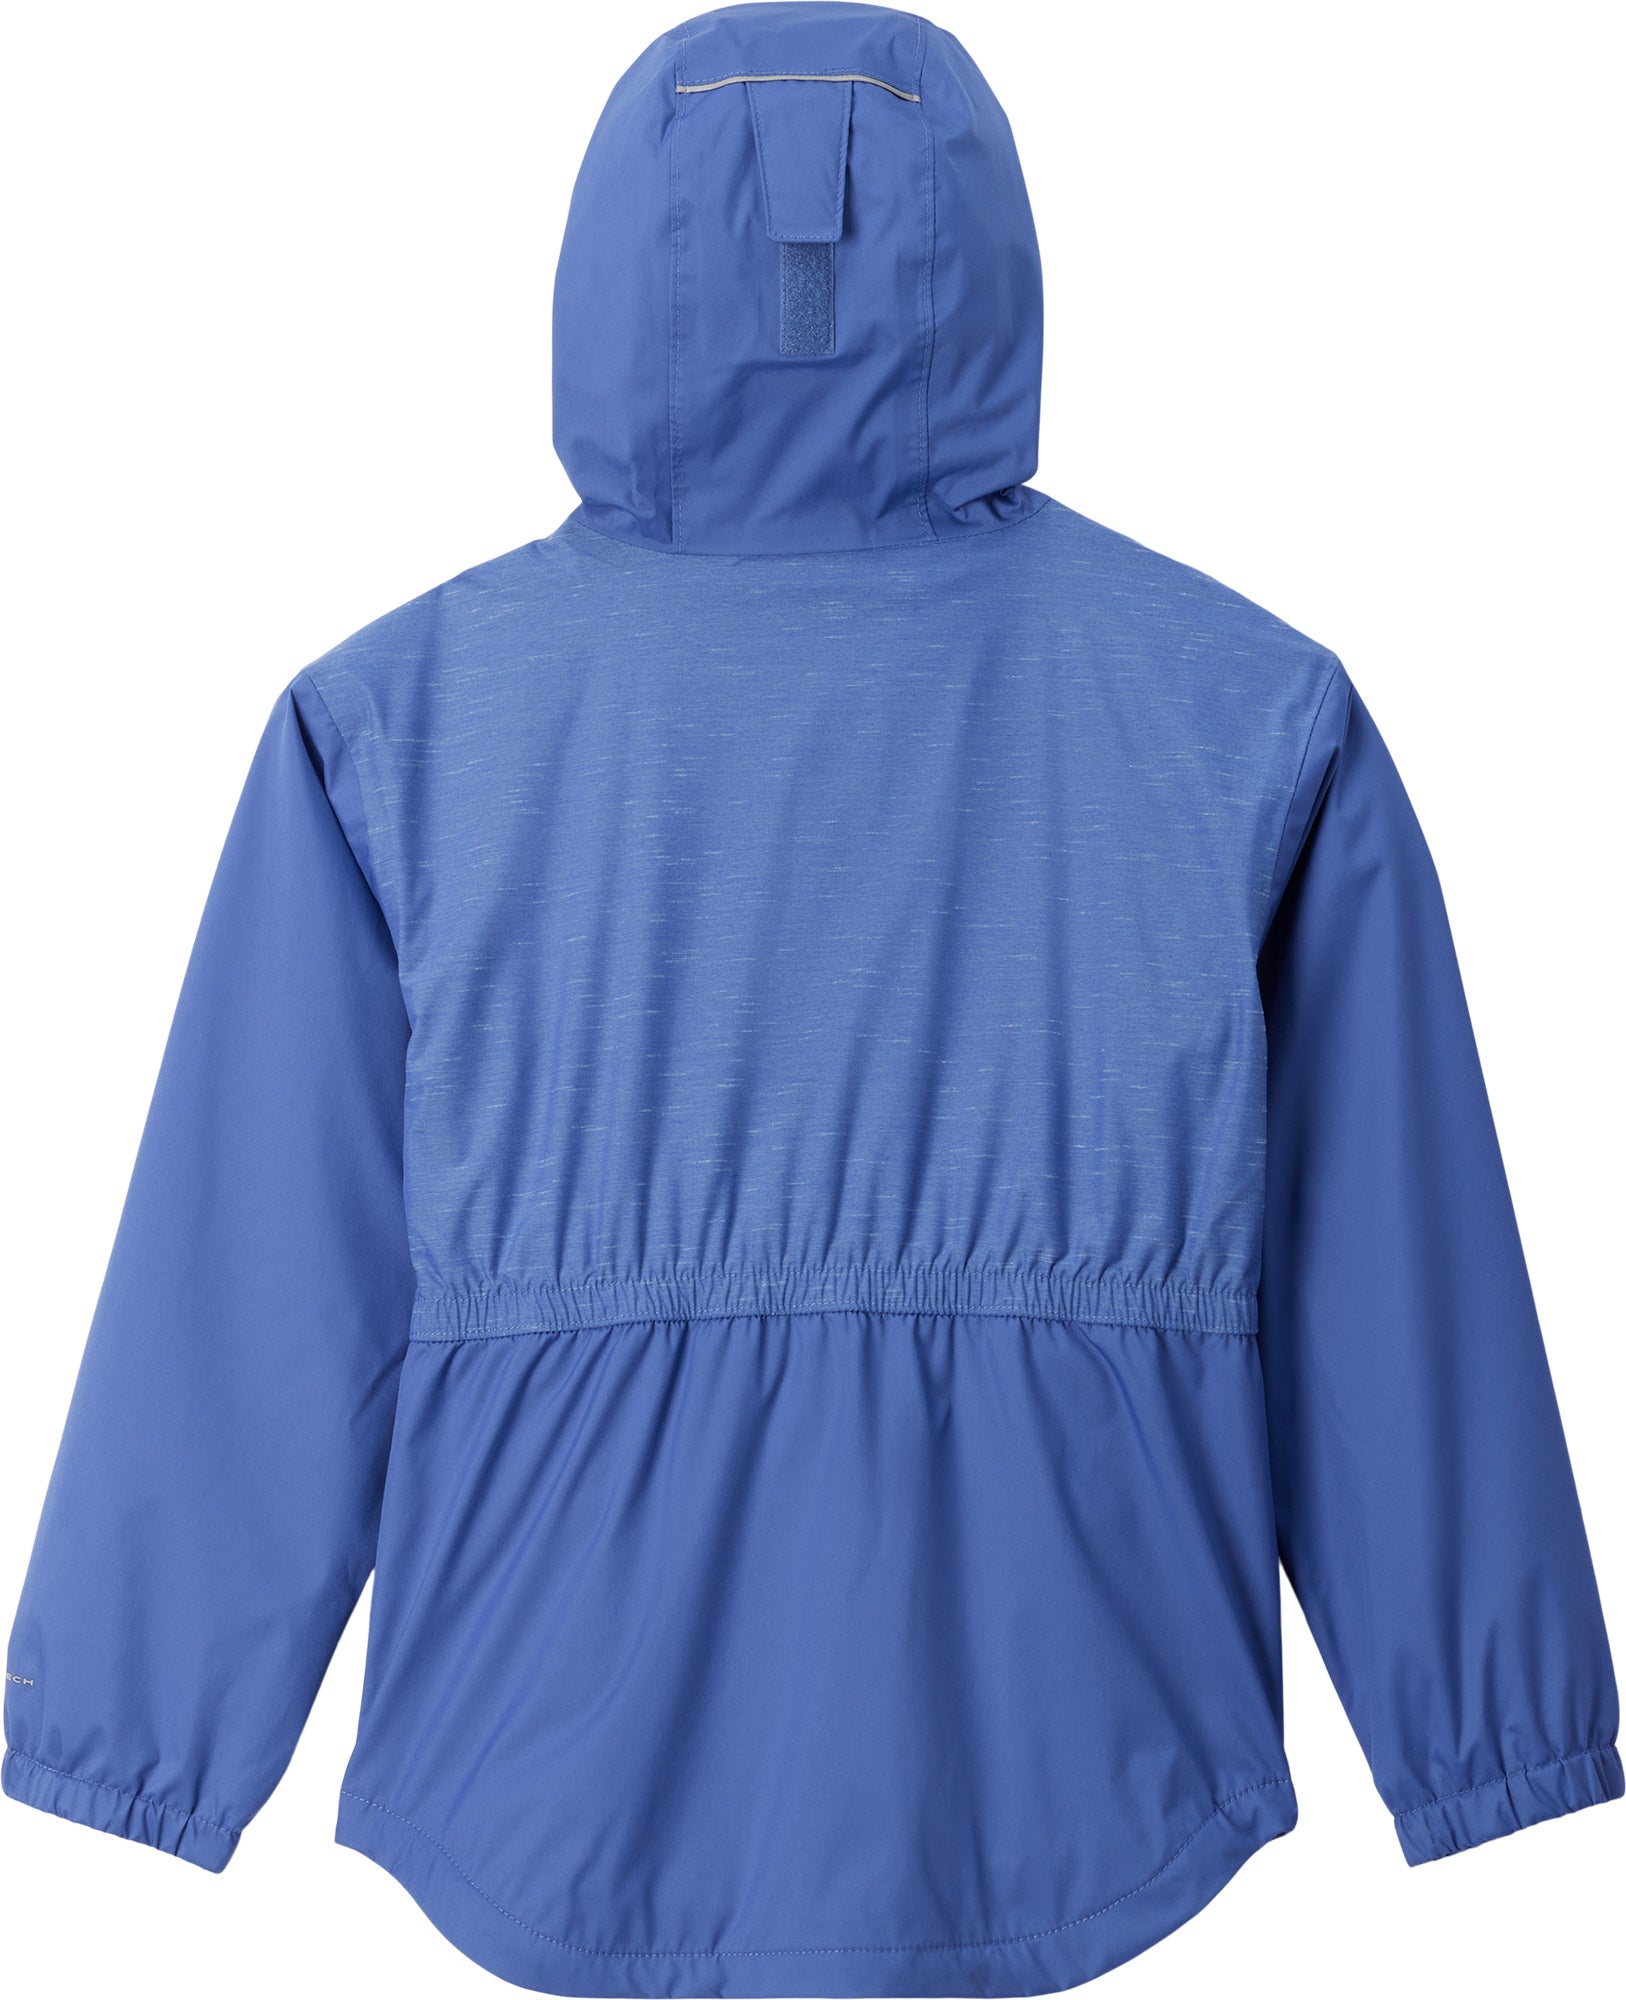 Columbia Boys' Rainy Trails Fleece Lined Jacket